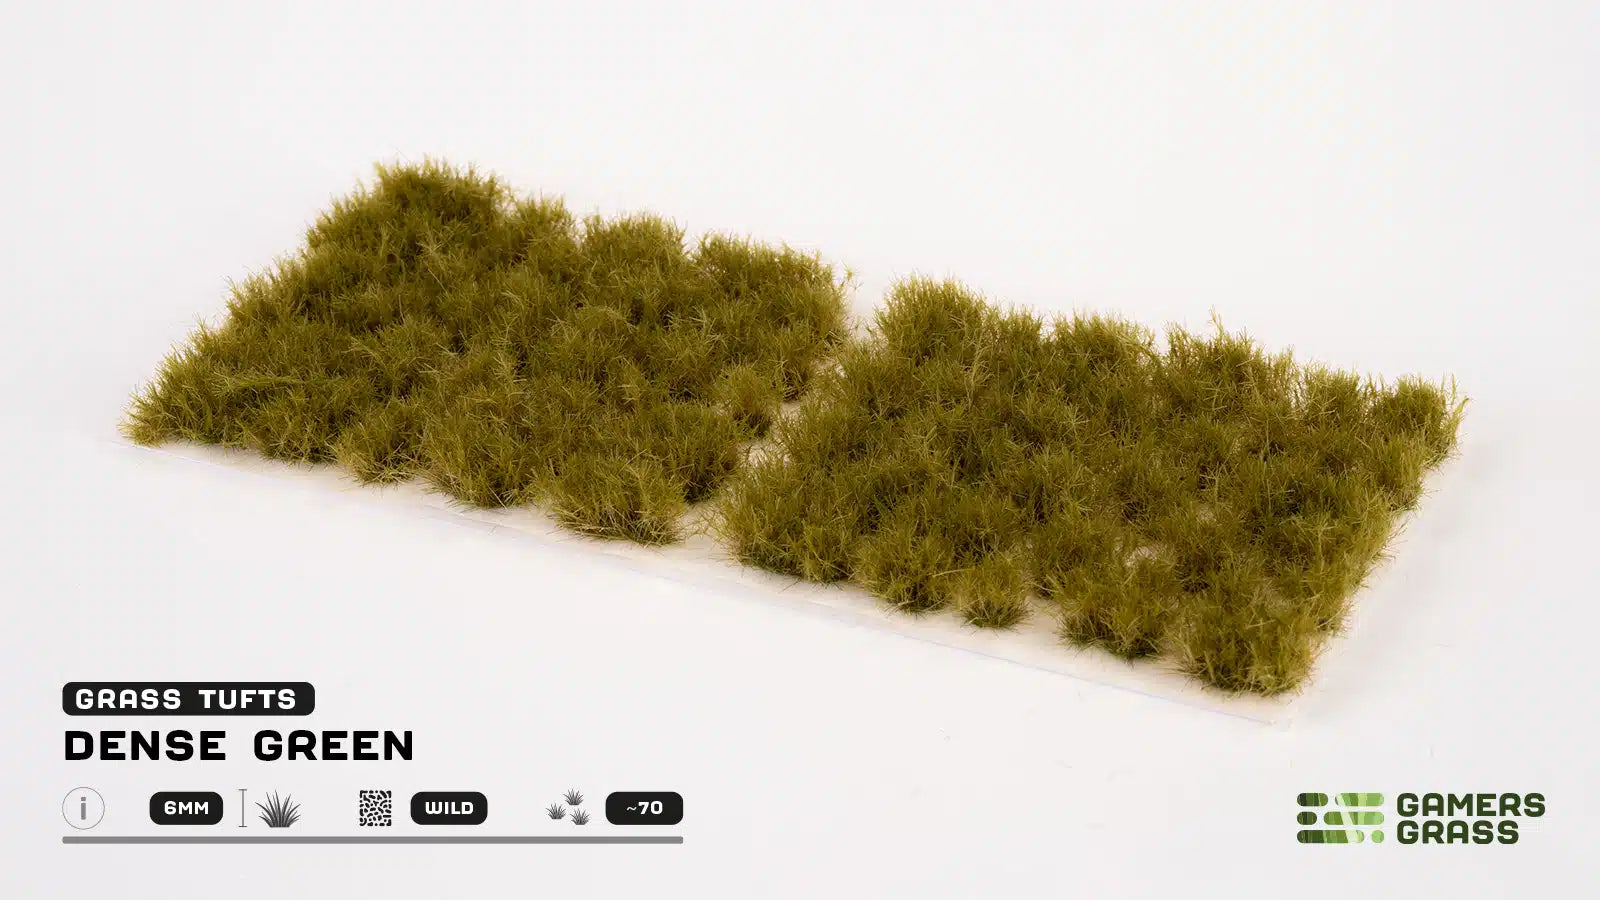 Dense Green 6mm Tufts (Wild) - Gamers Grass - 0